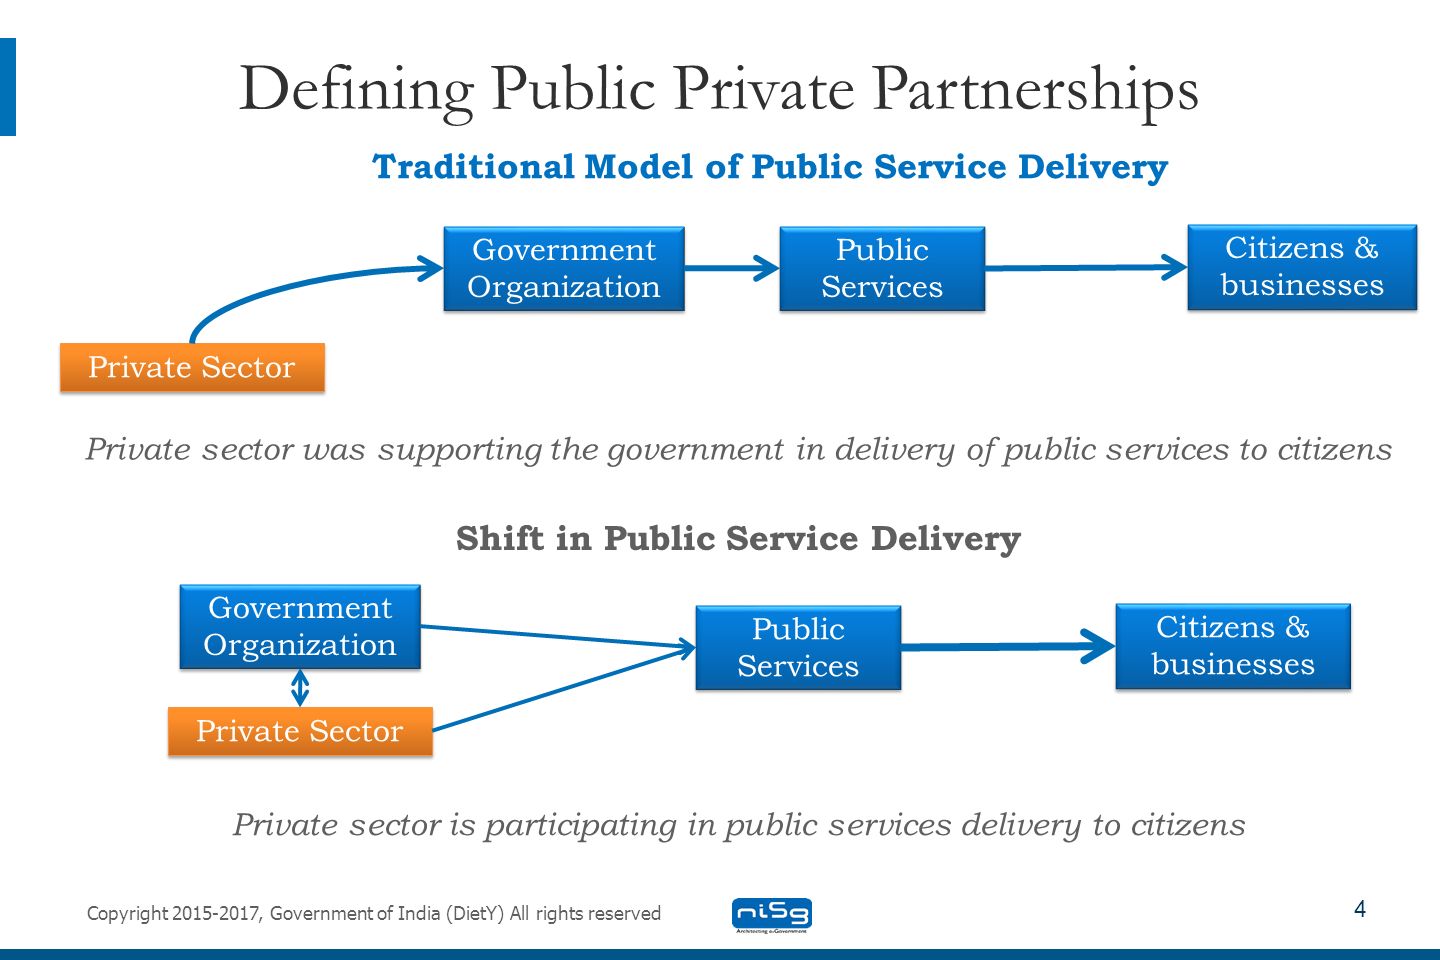 Public private partnership